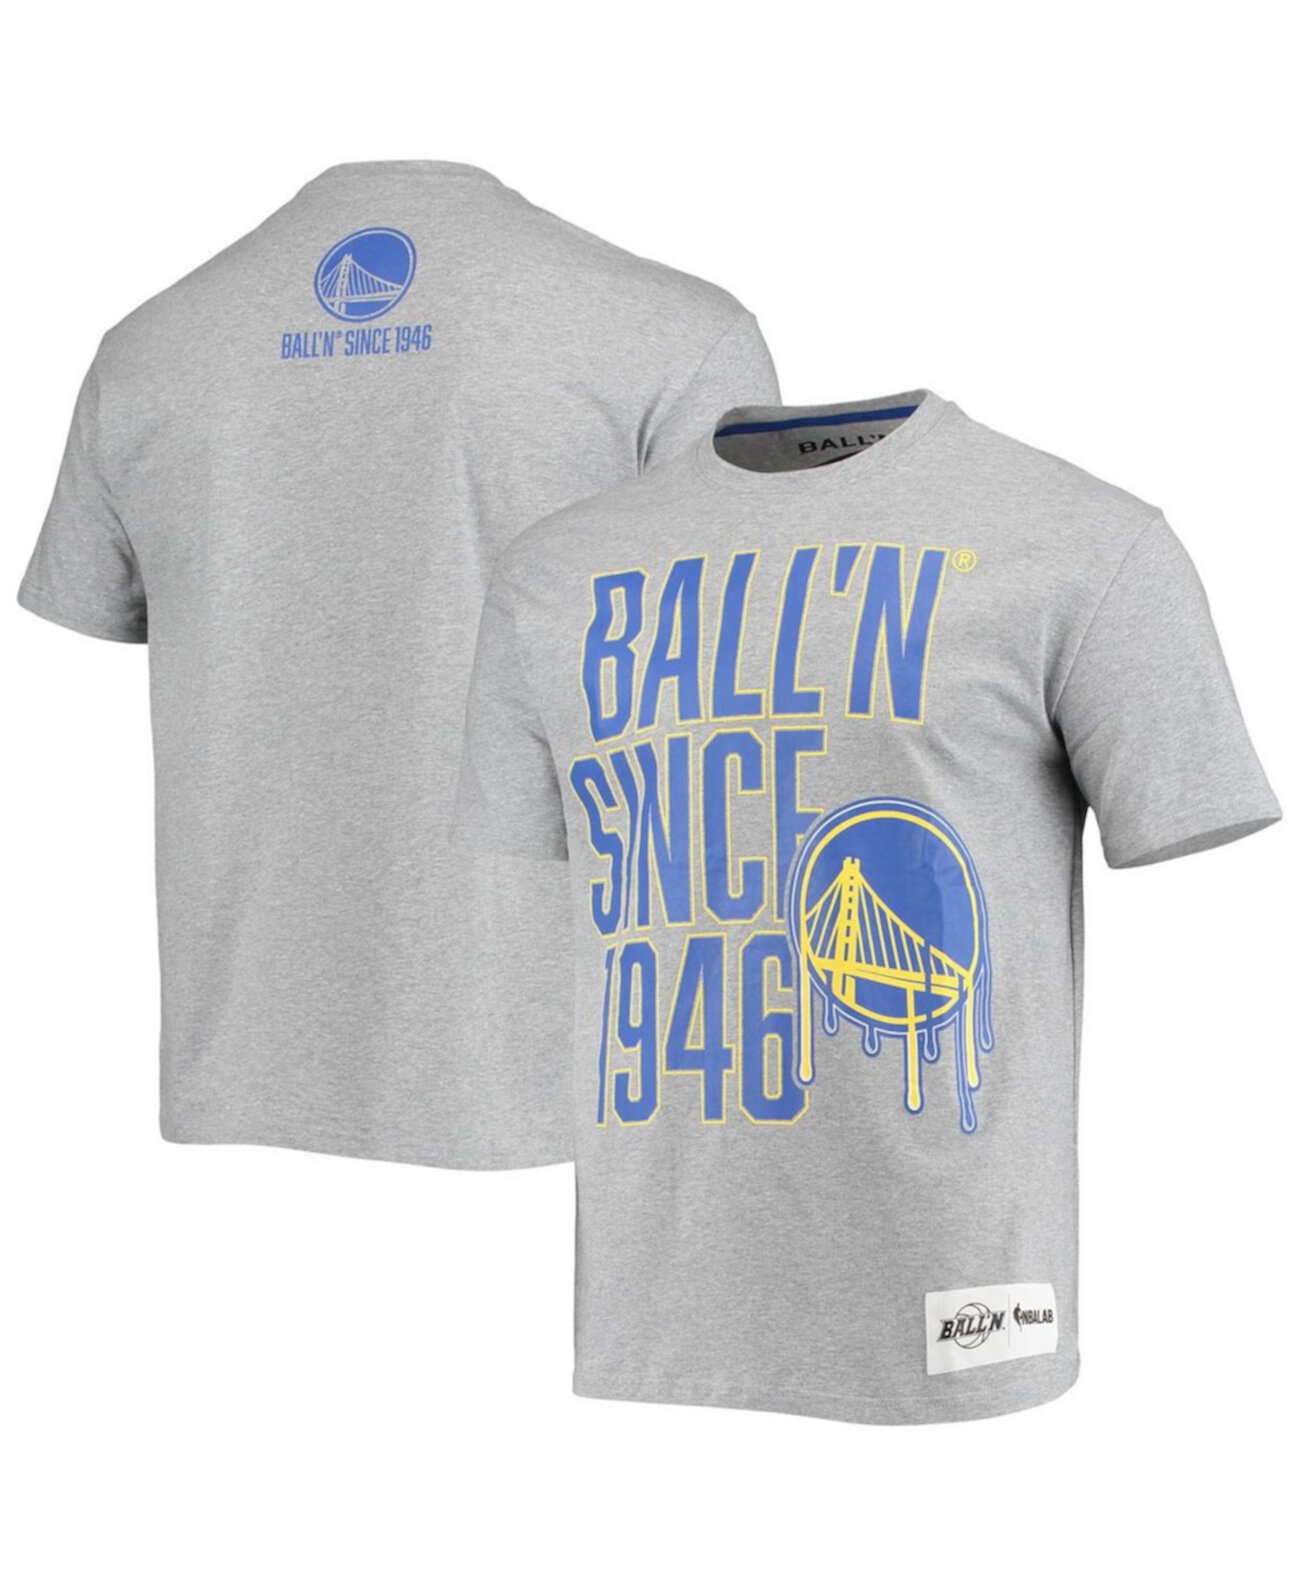 Мужская футболка Heather Grey Golden State Warriors с 1946 года BALL'N